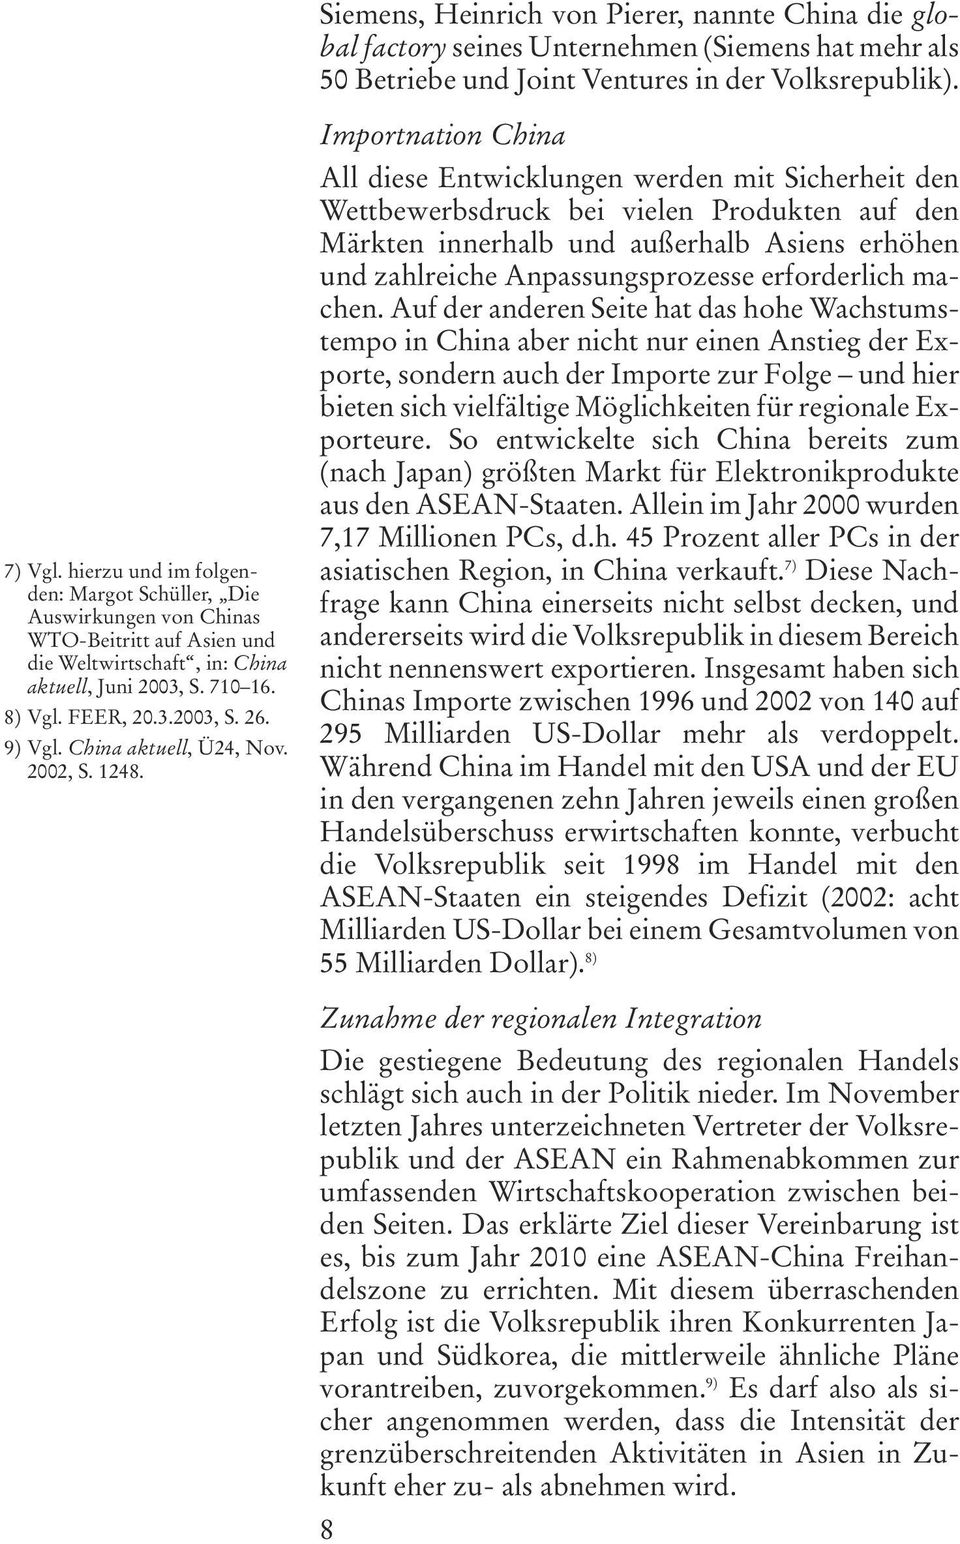 China aktuell, Ü24, Nov. 2002, S. 1248.